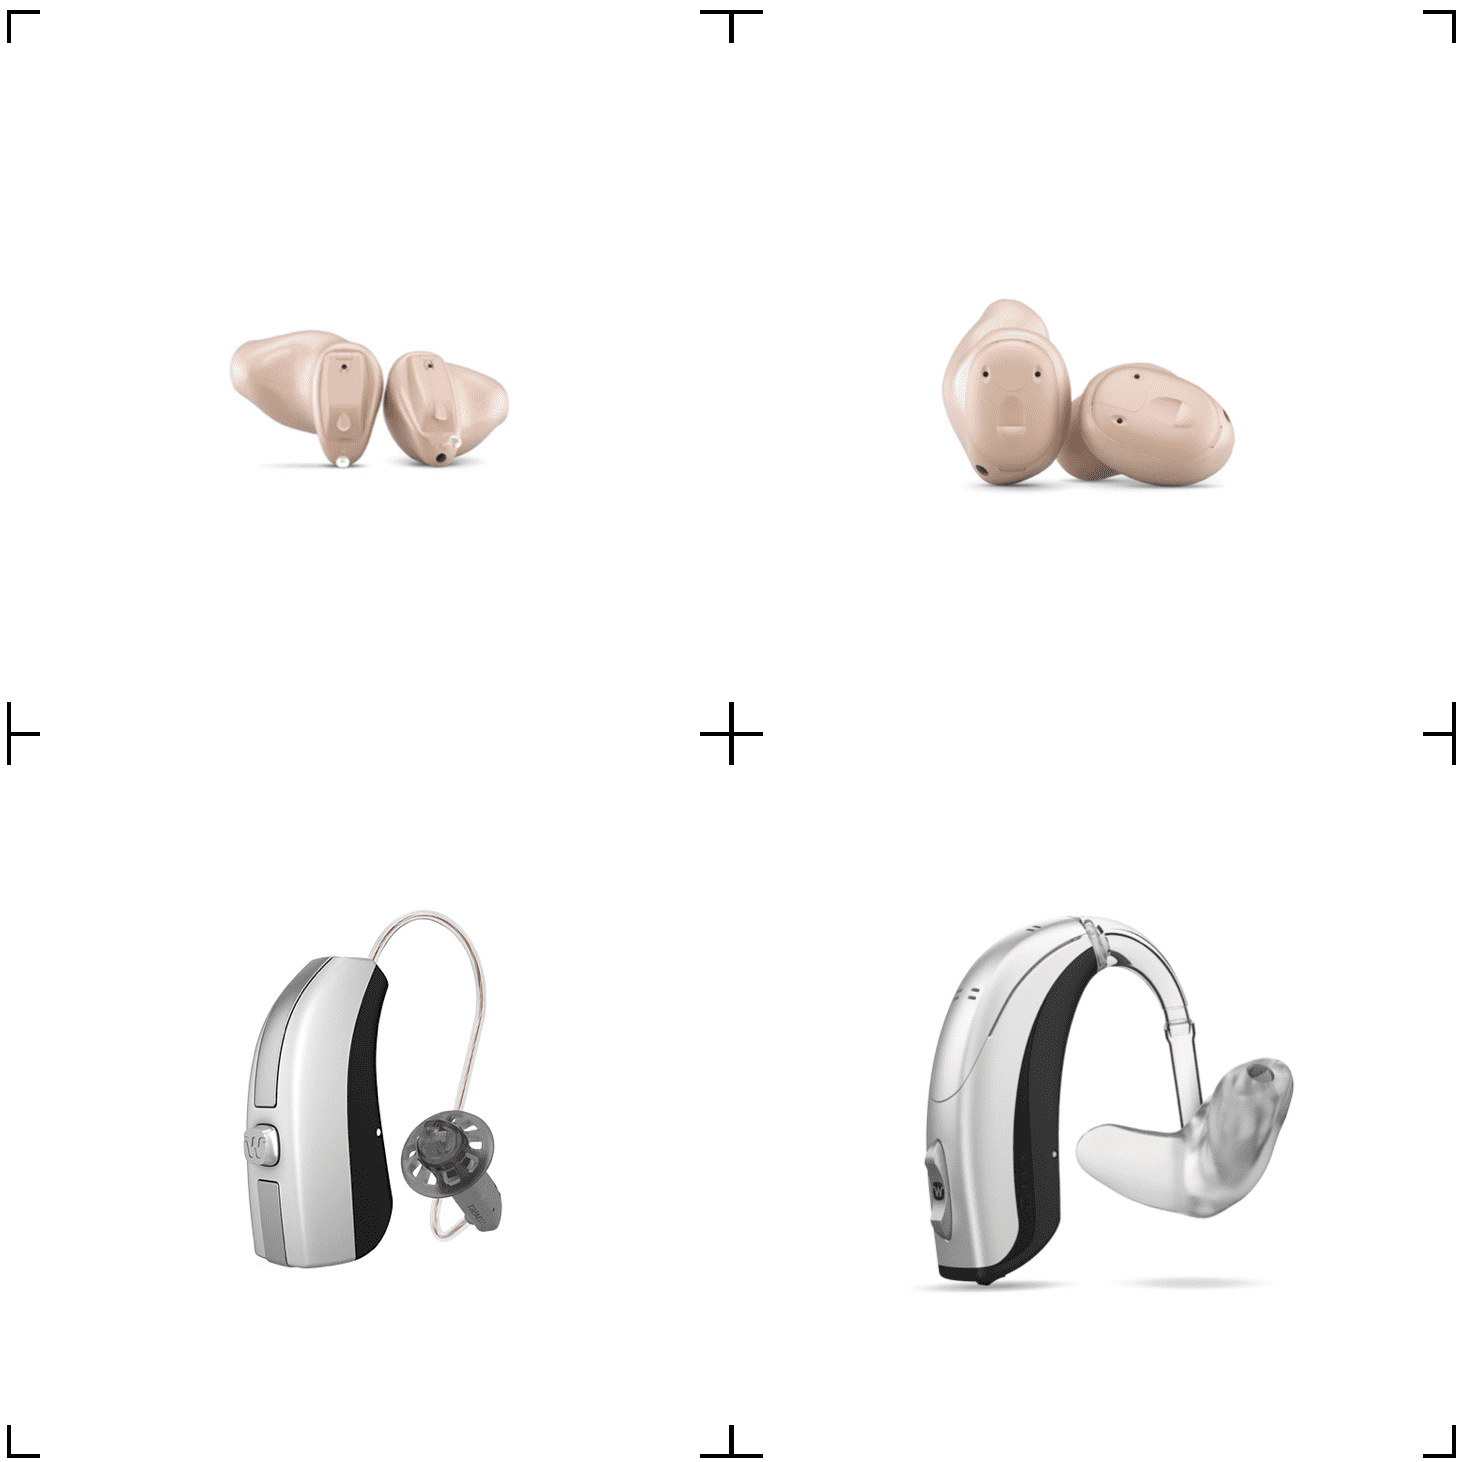 Hearing aids